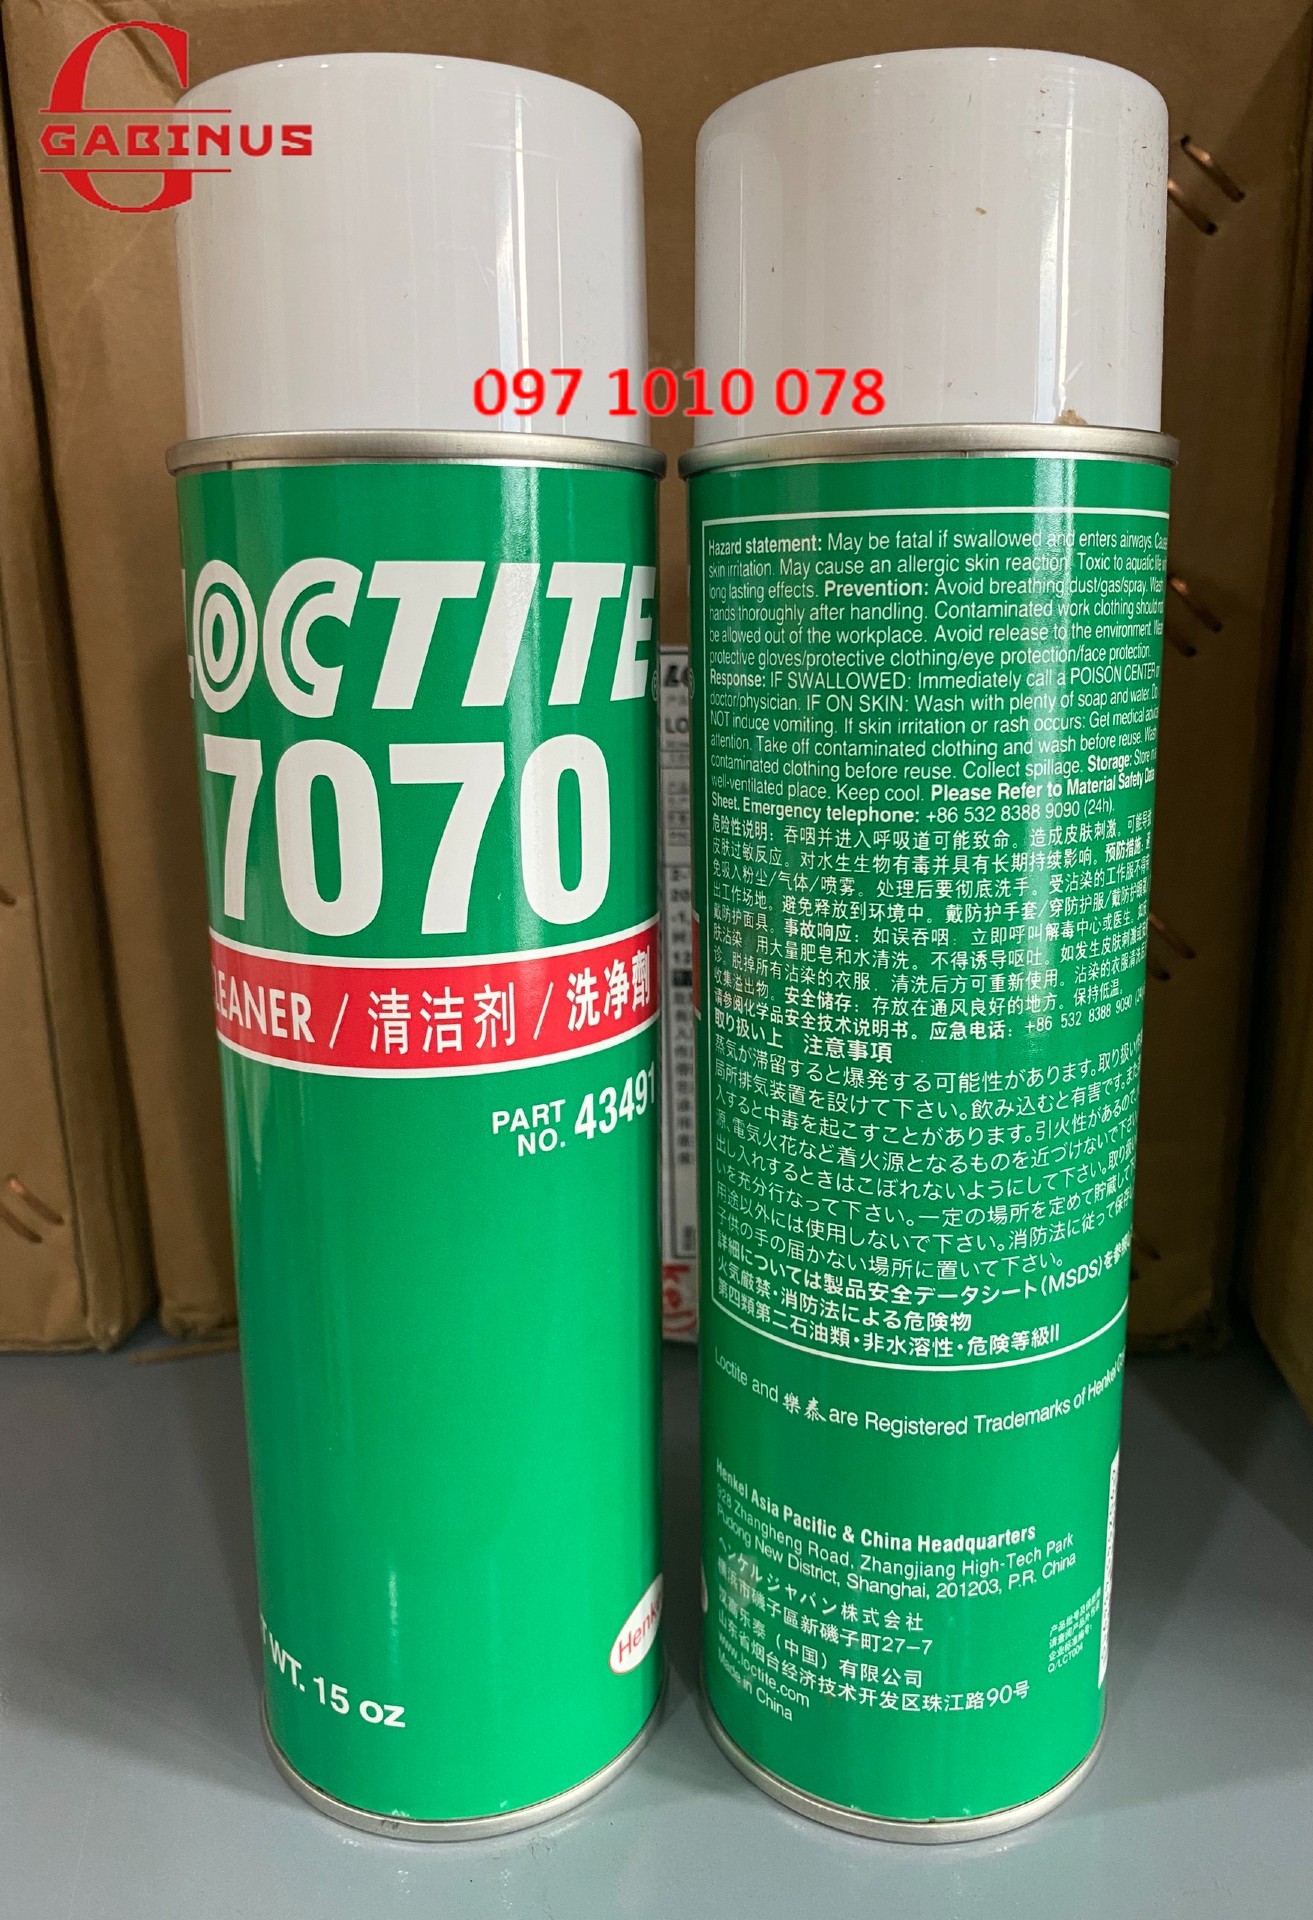 LOCTITE 7070 Industrial Cleaner